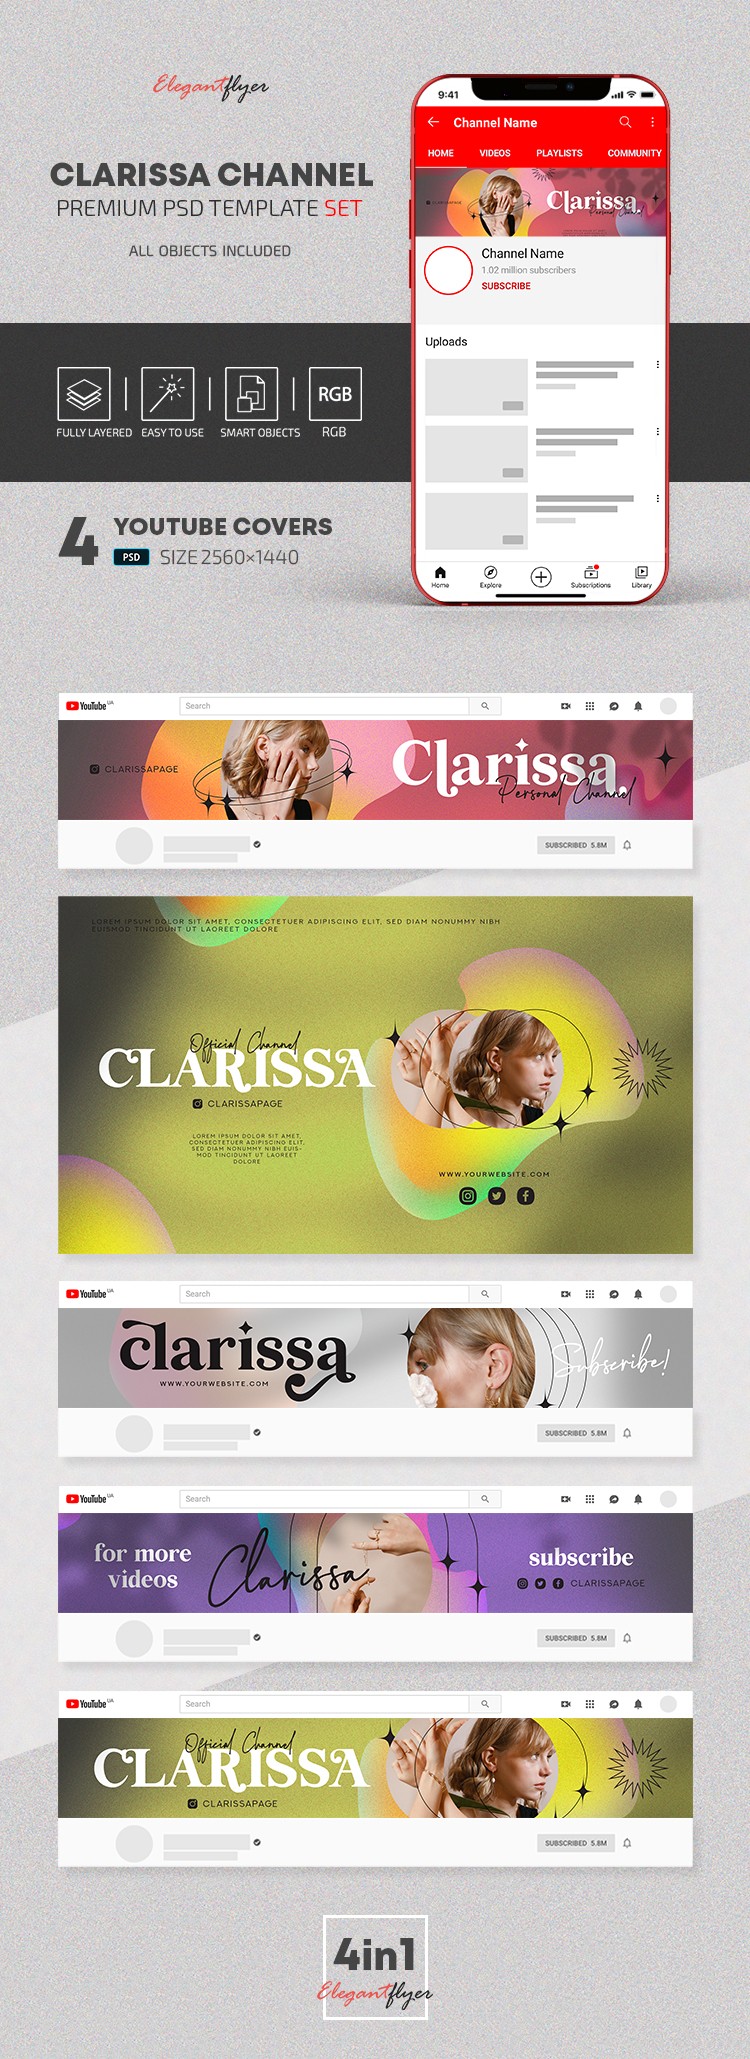 Clarissa Kanal Youtube by ElegantFlyer